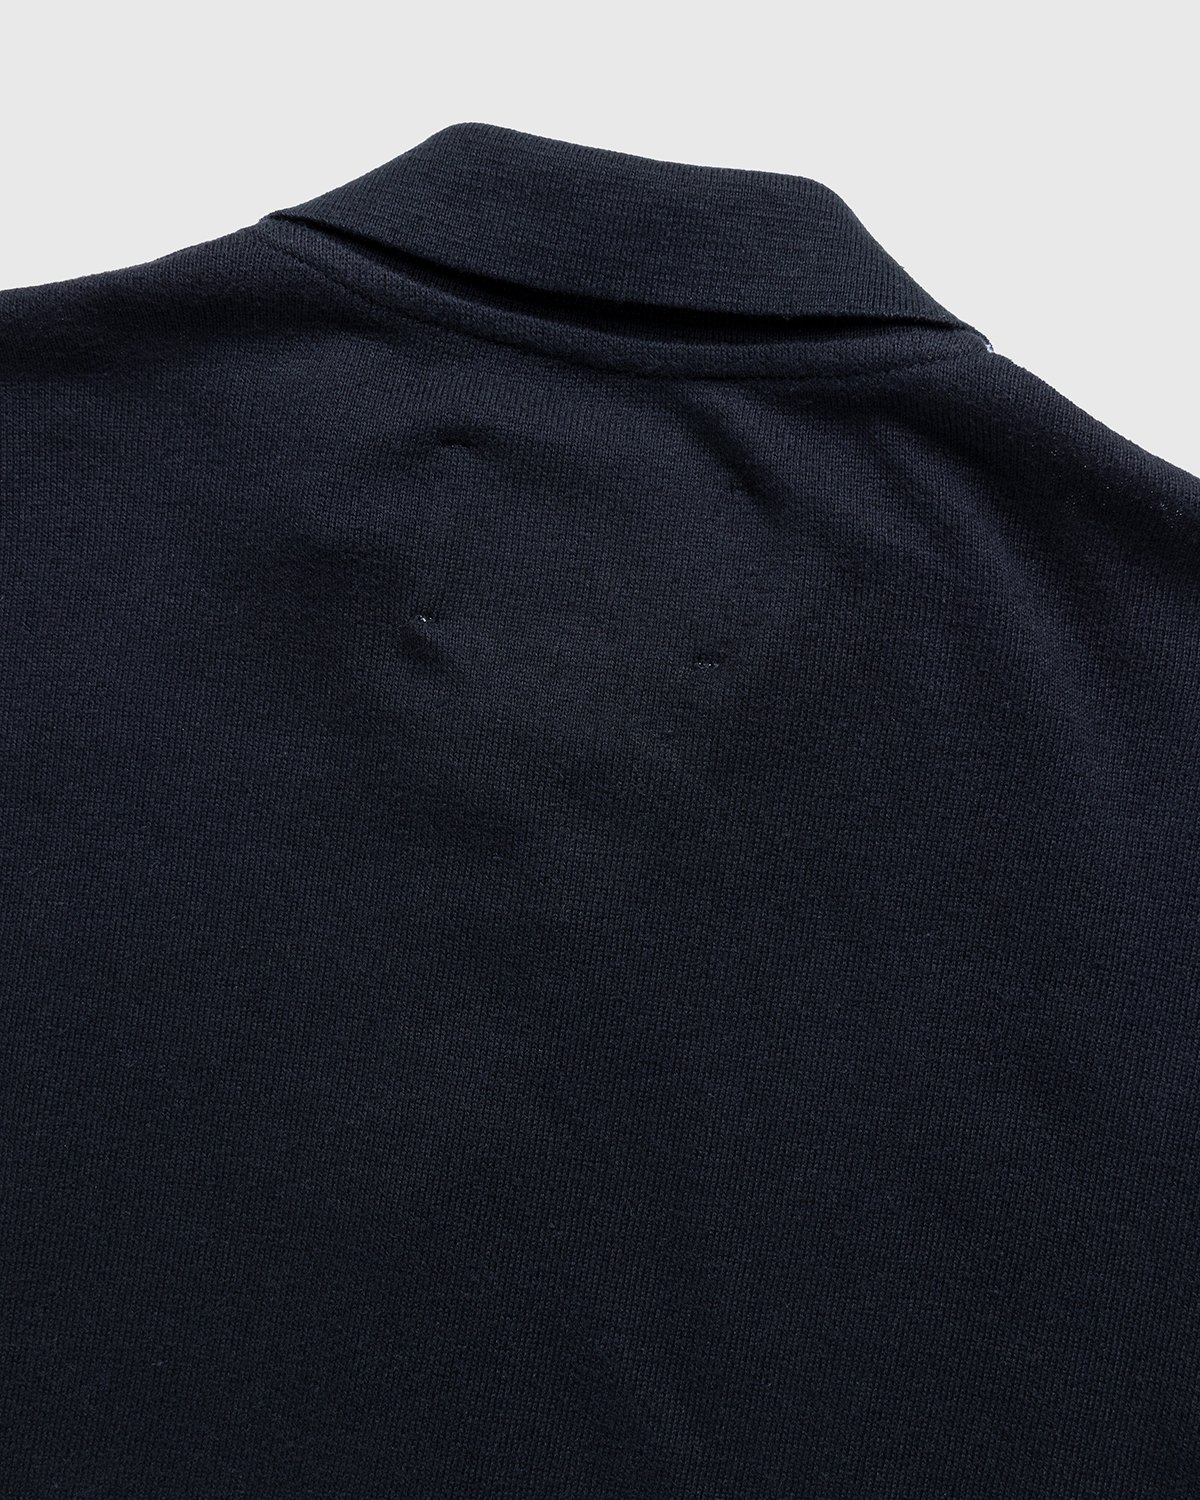 Highsnobiety - Knit Bowling Shirt Blue Black - Clothing - Blue - Image 4